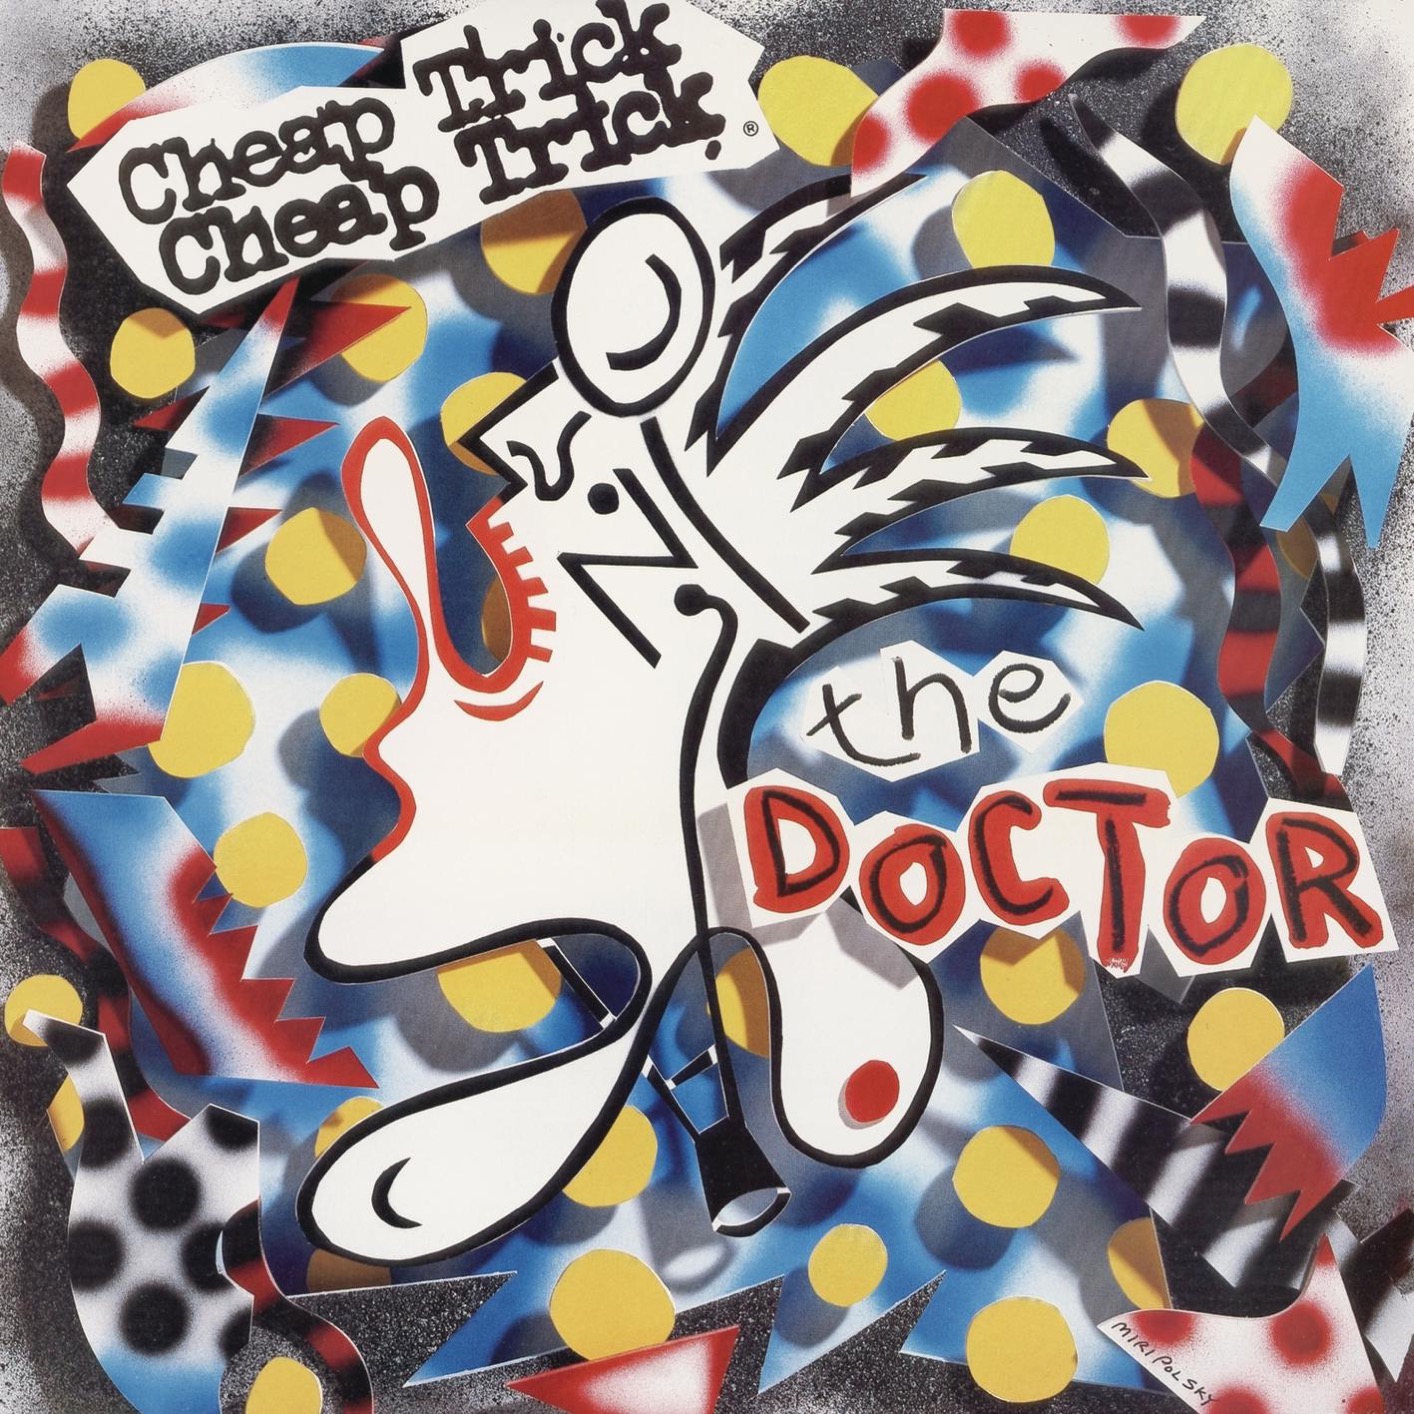 Cheap Trick - The Doctor (1986/2015) [FLAC 24bit/96kHz]